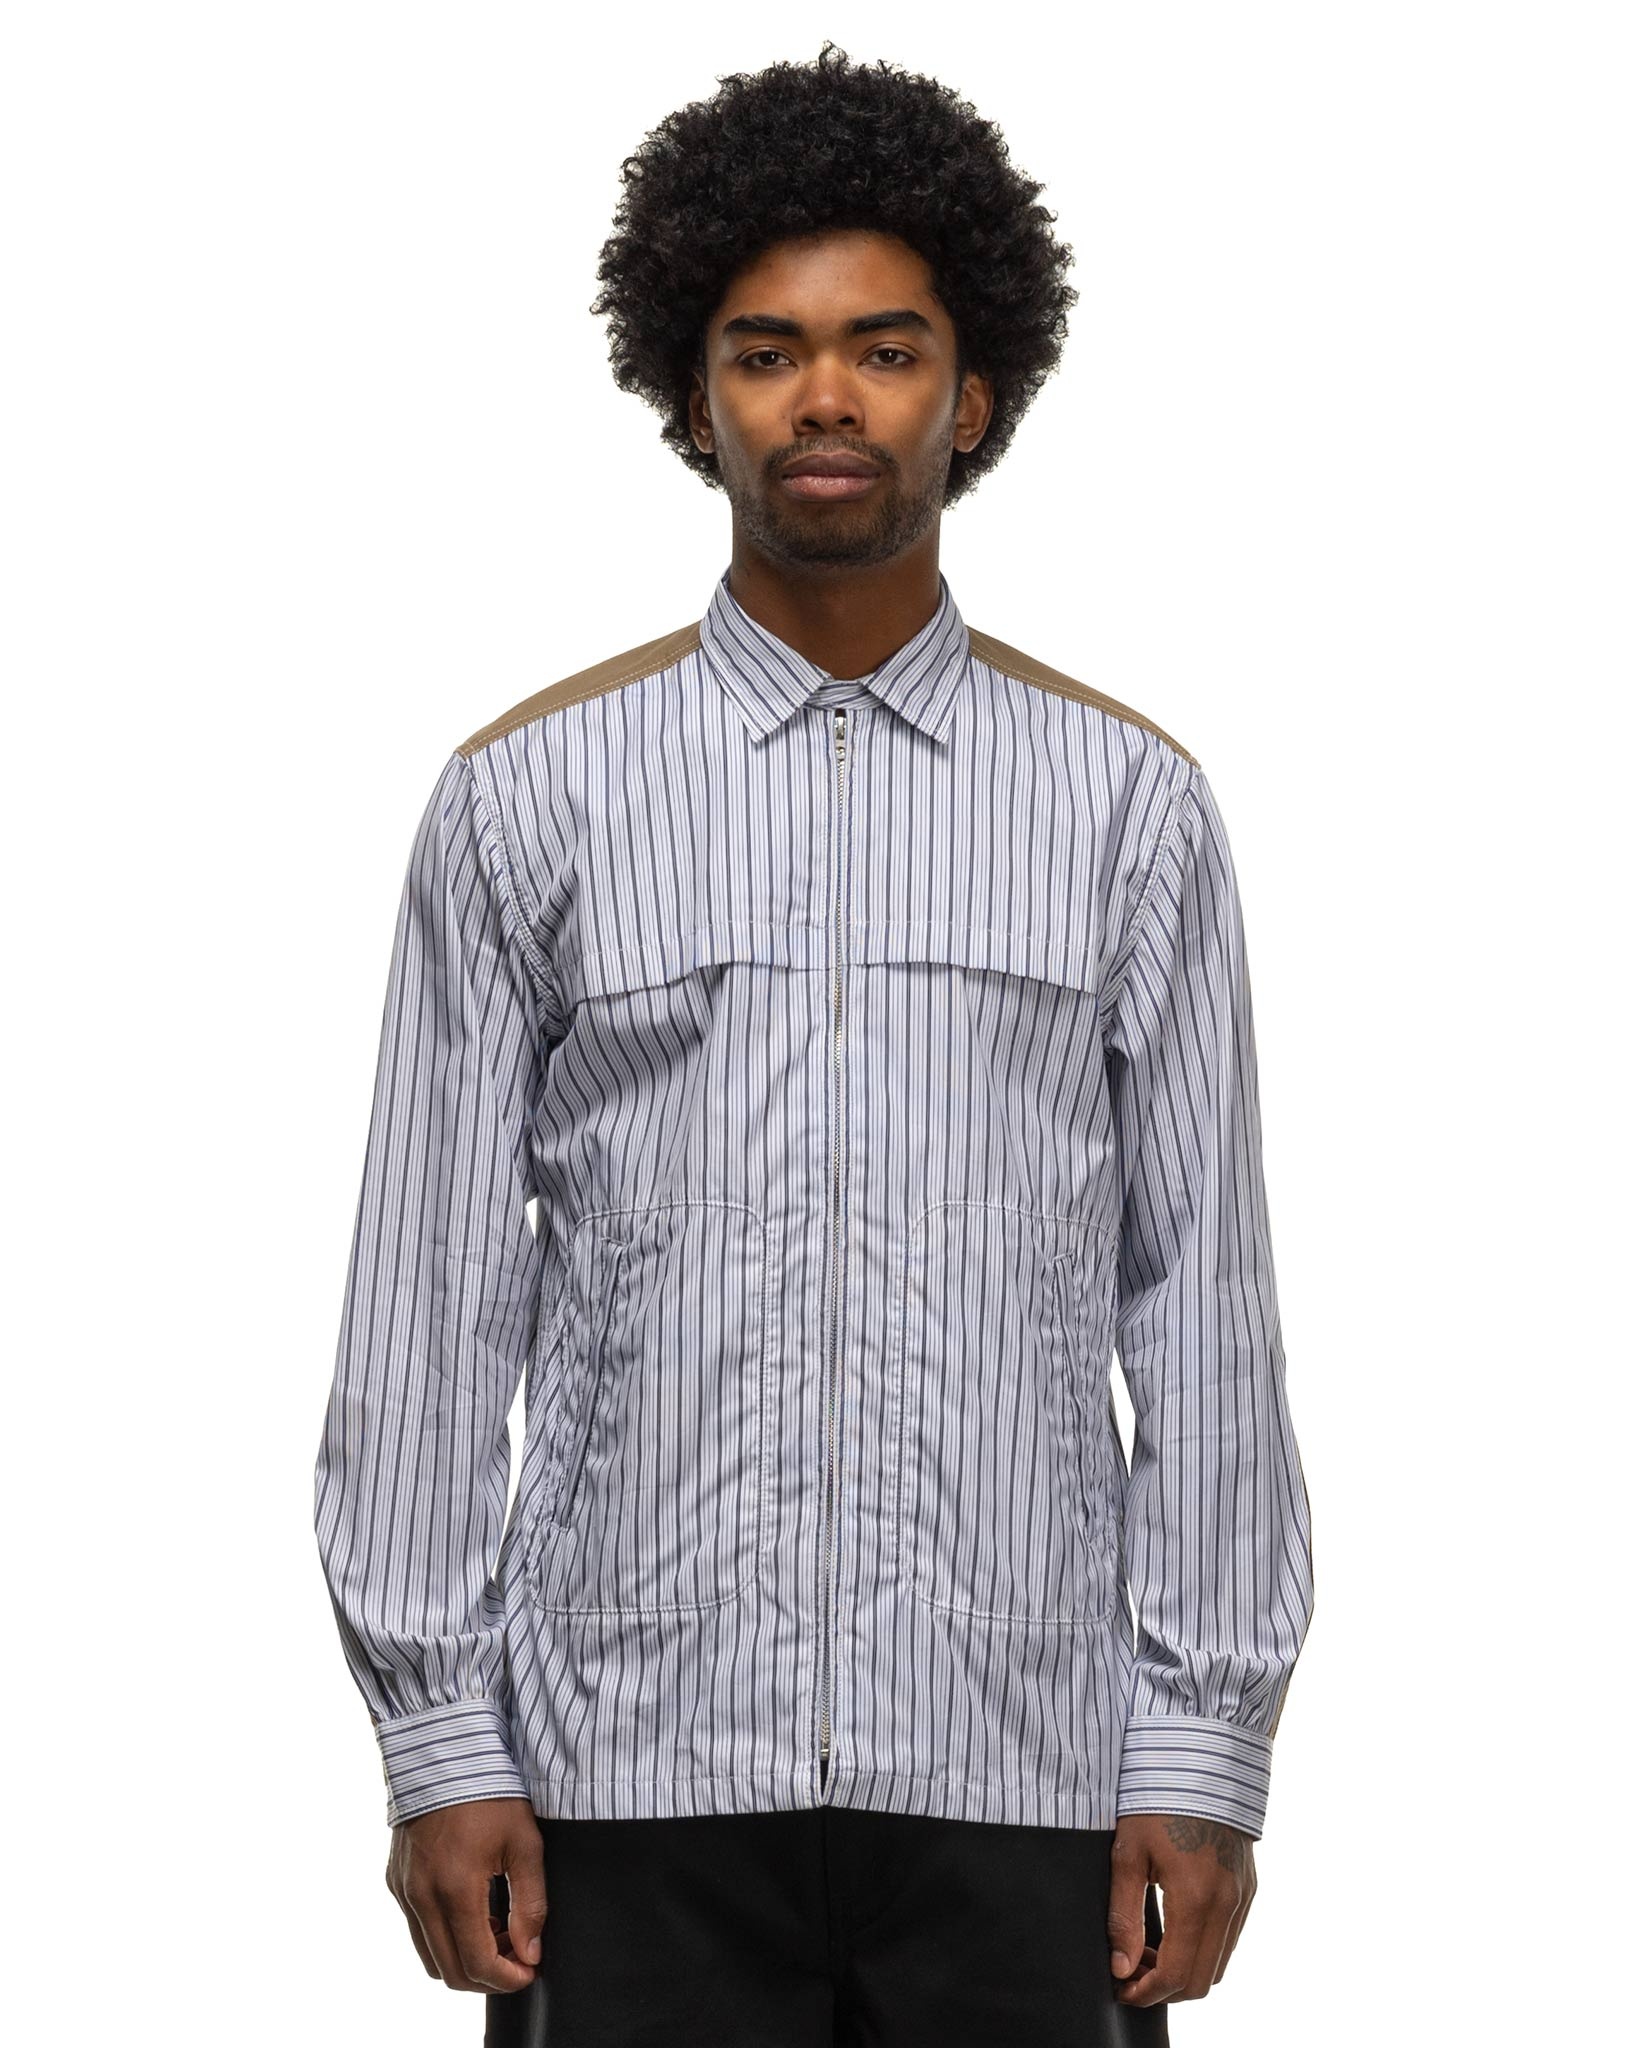 Men's Cotton Stripe Shirt White/Navy - 4